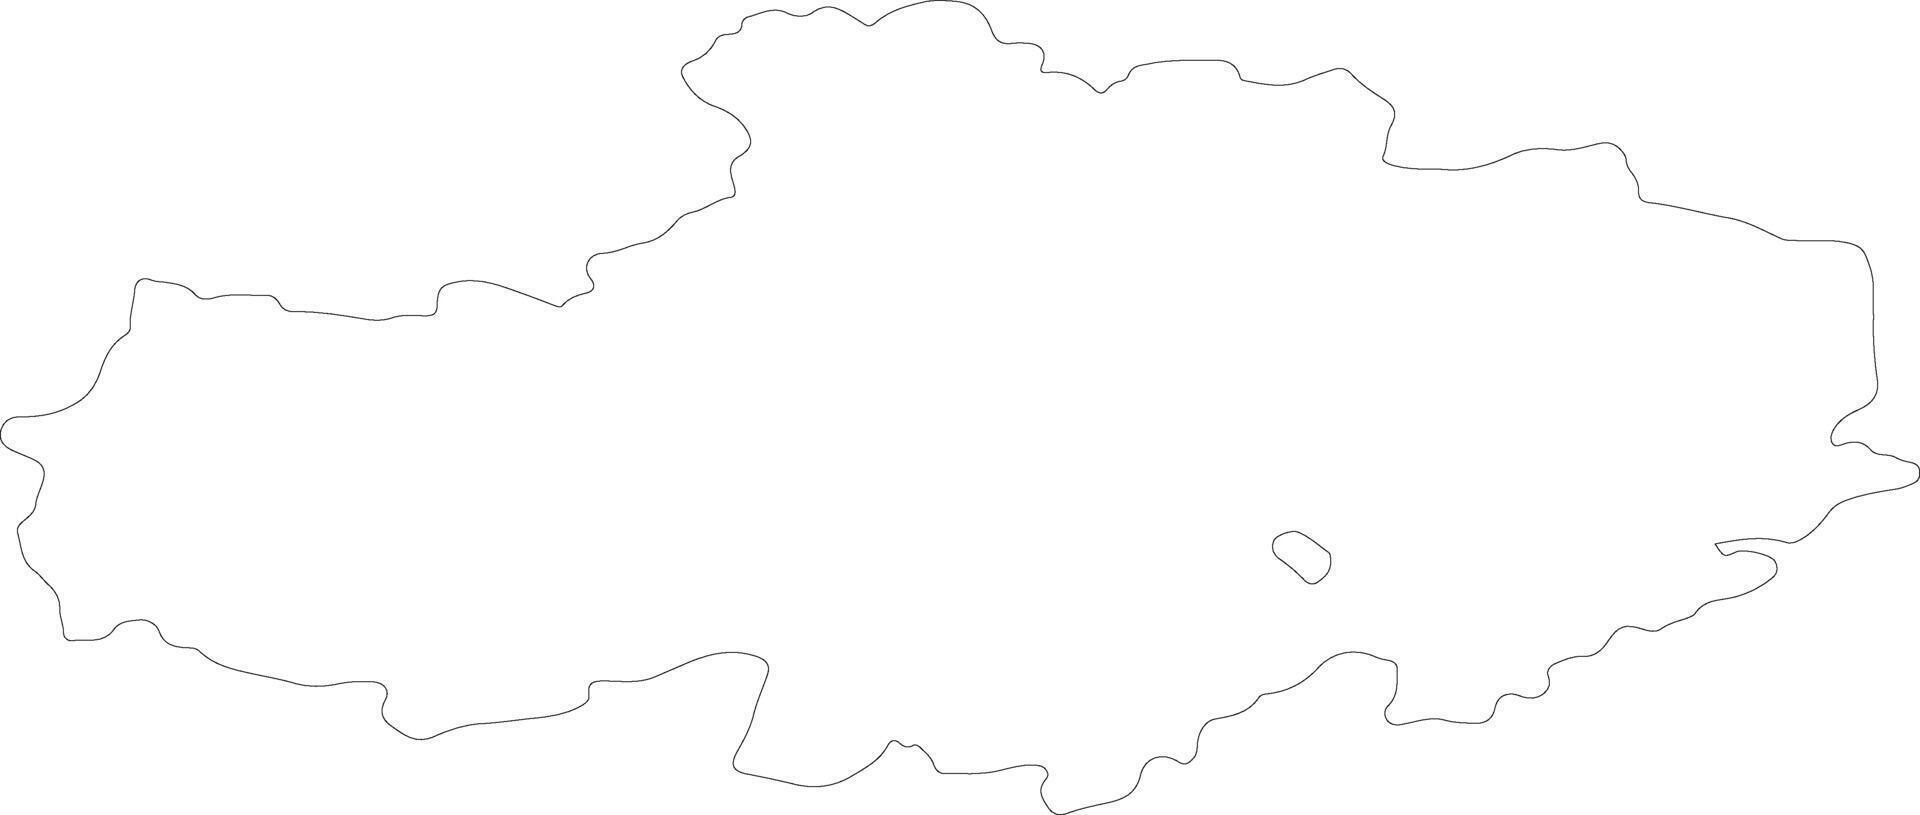 Aqmola Kazakhstan outline map vector